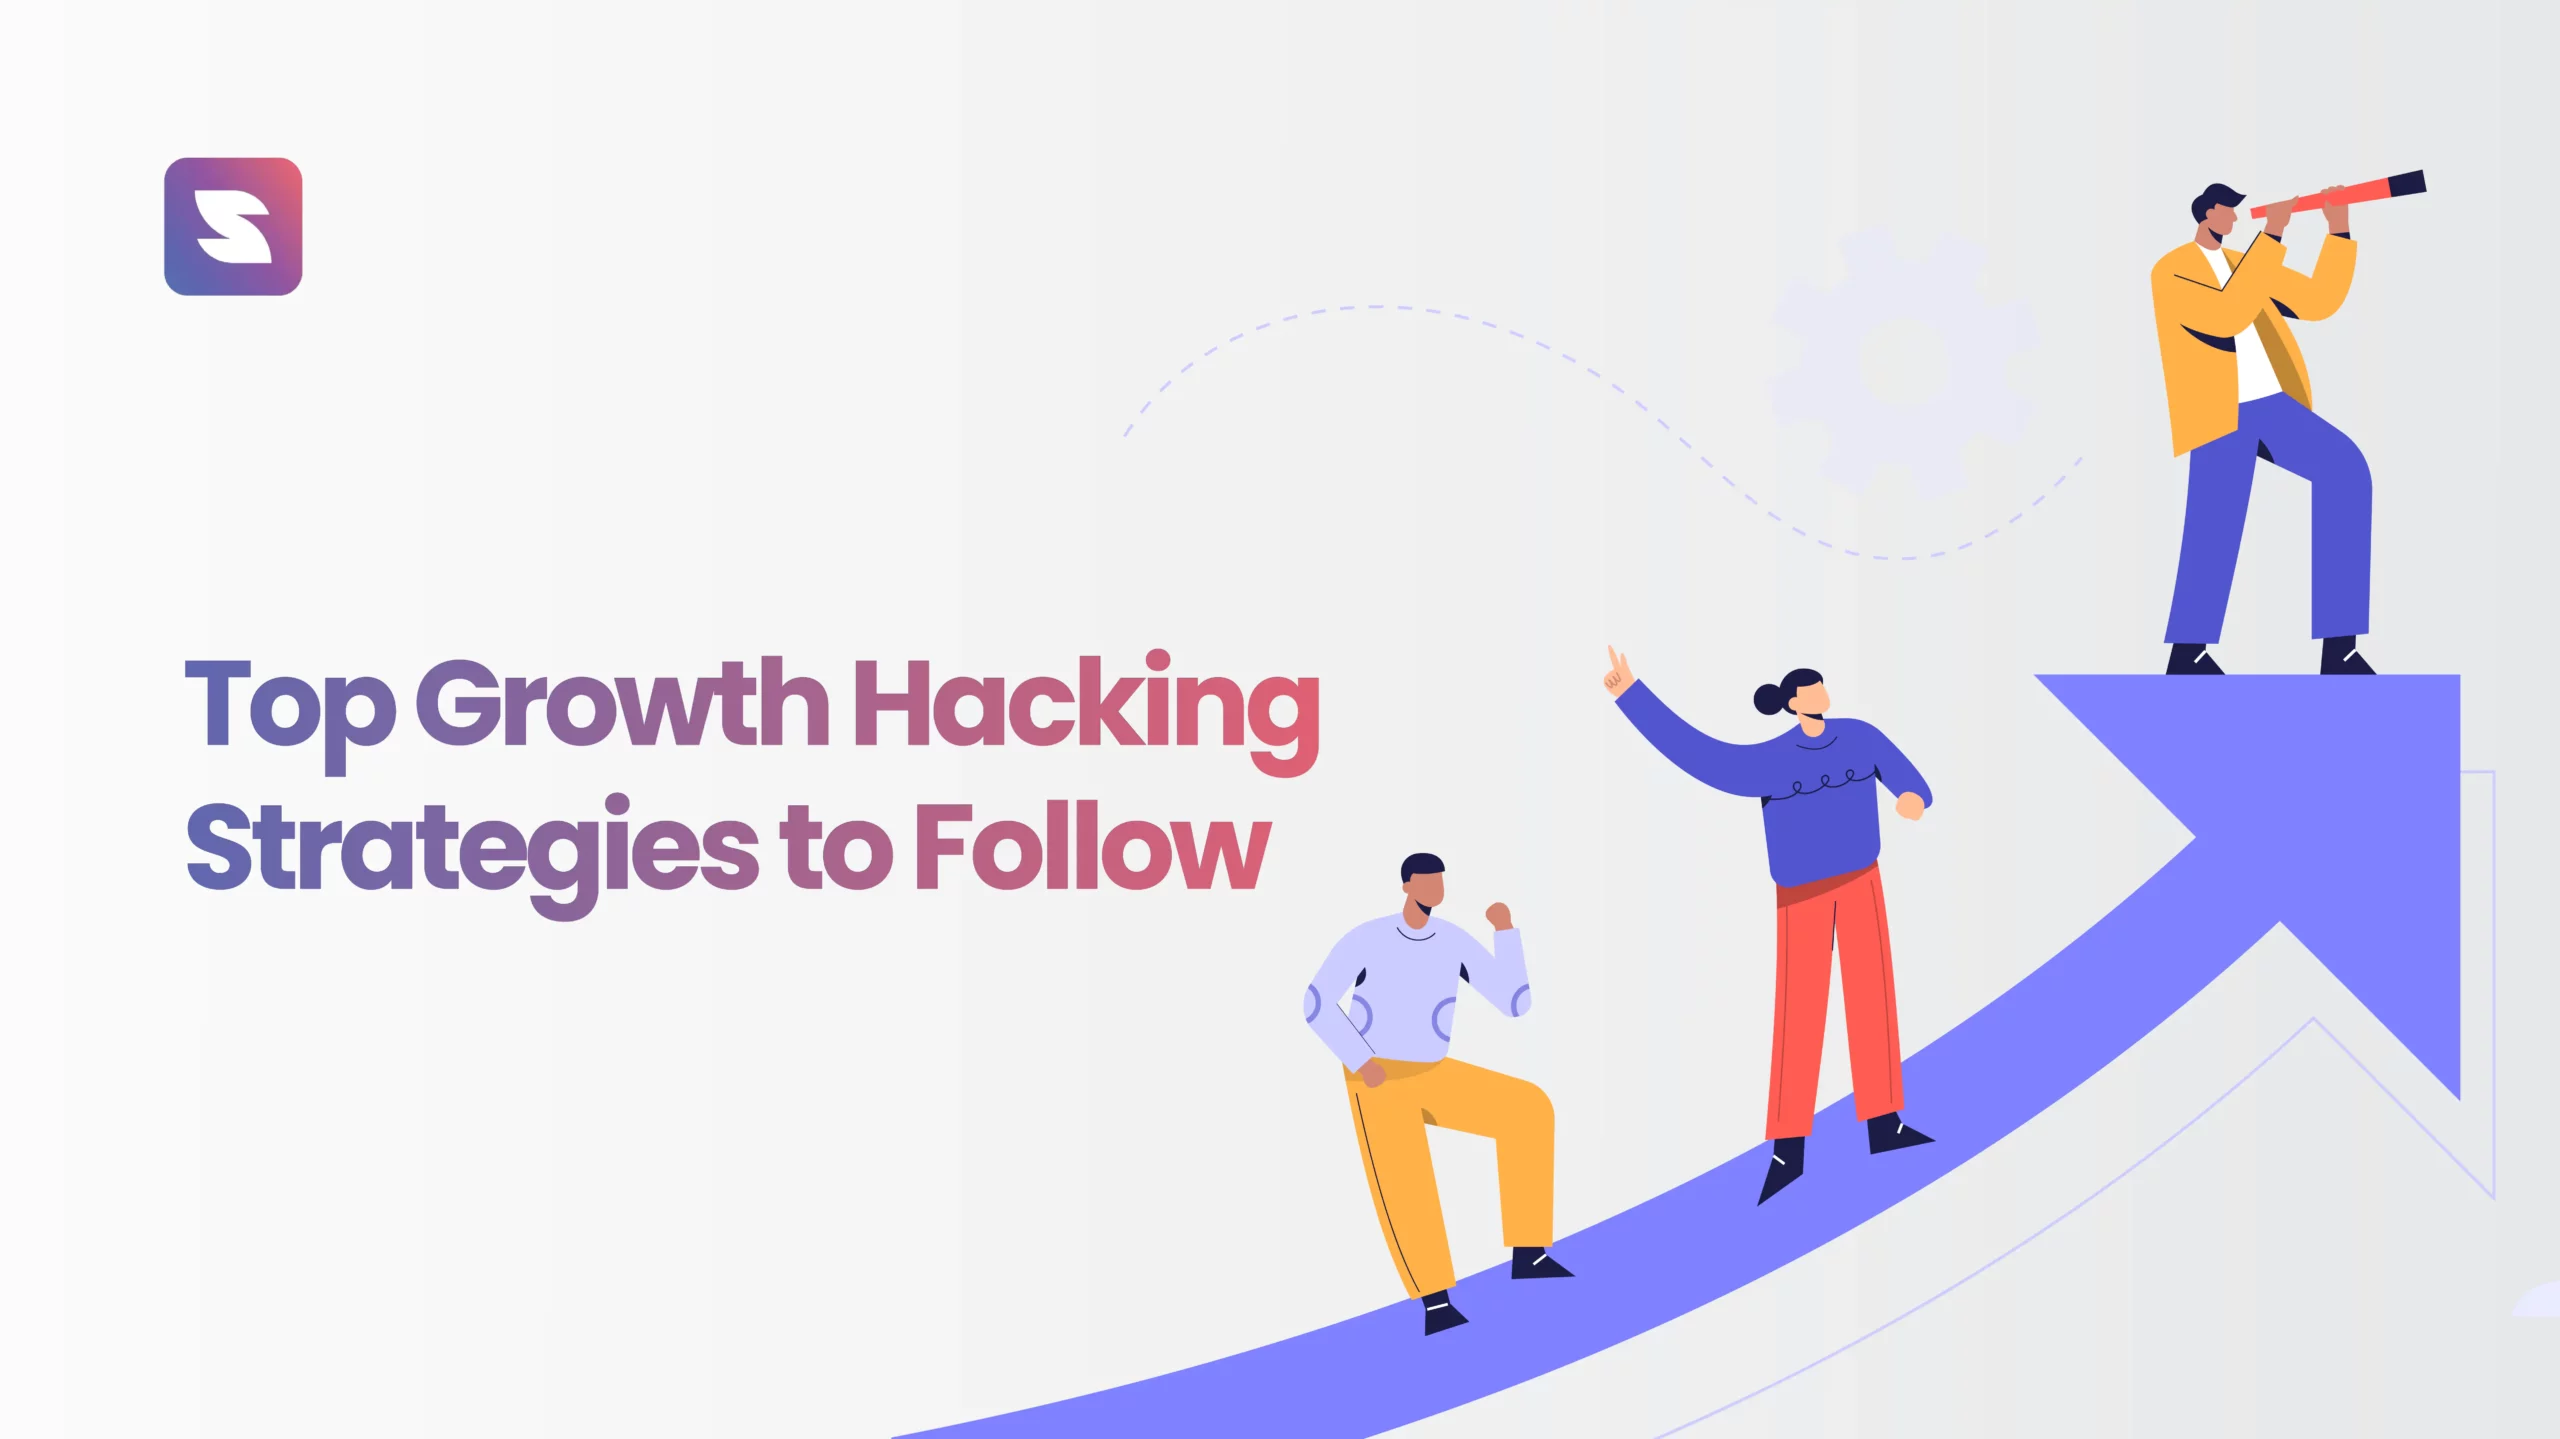 Top growth hacking strategies